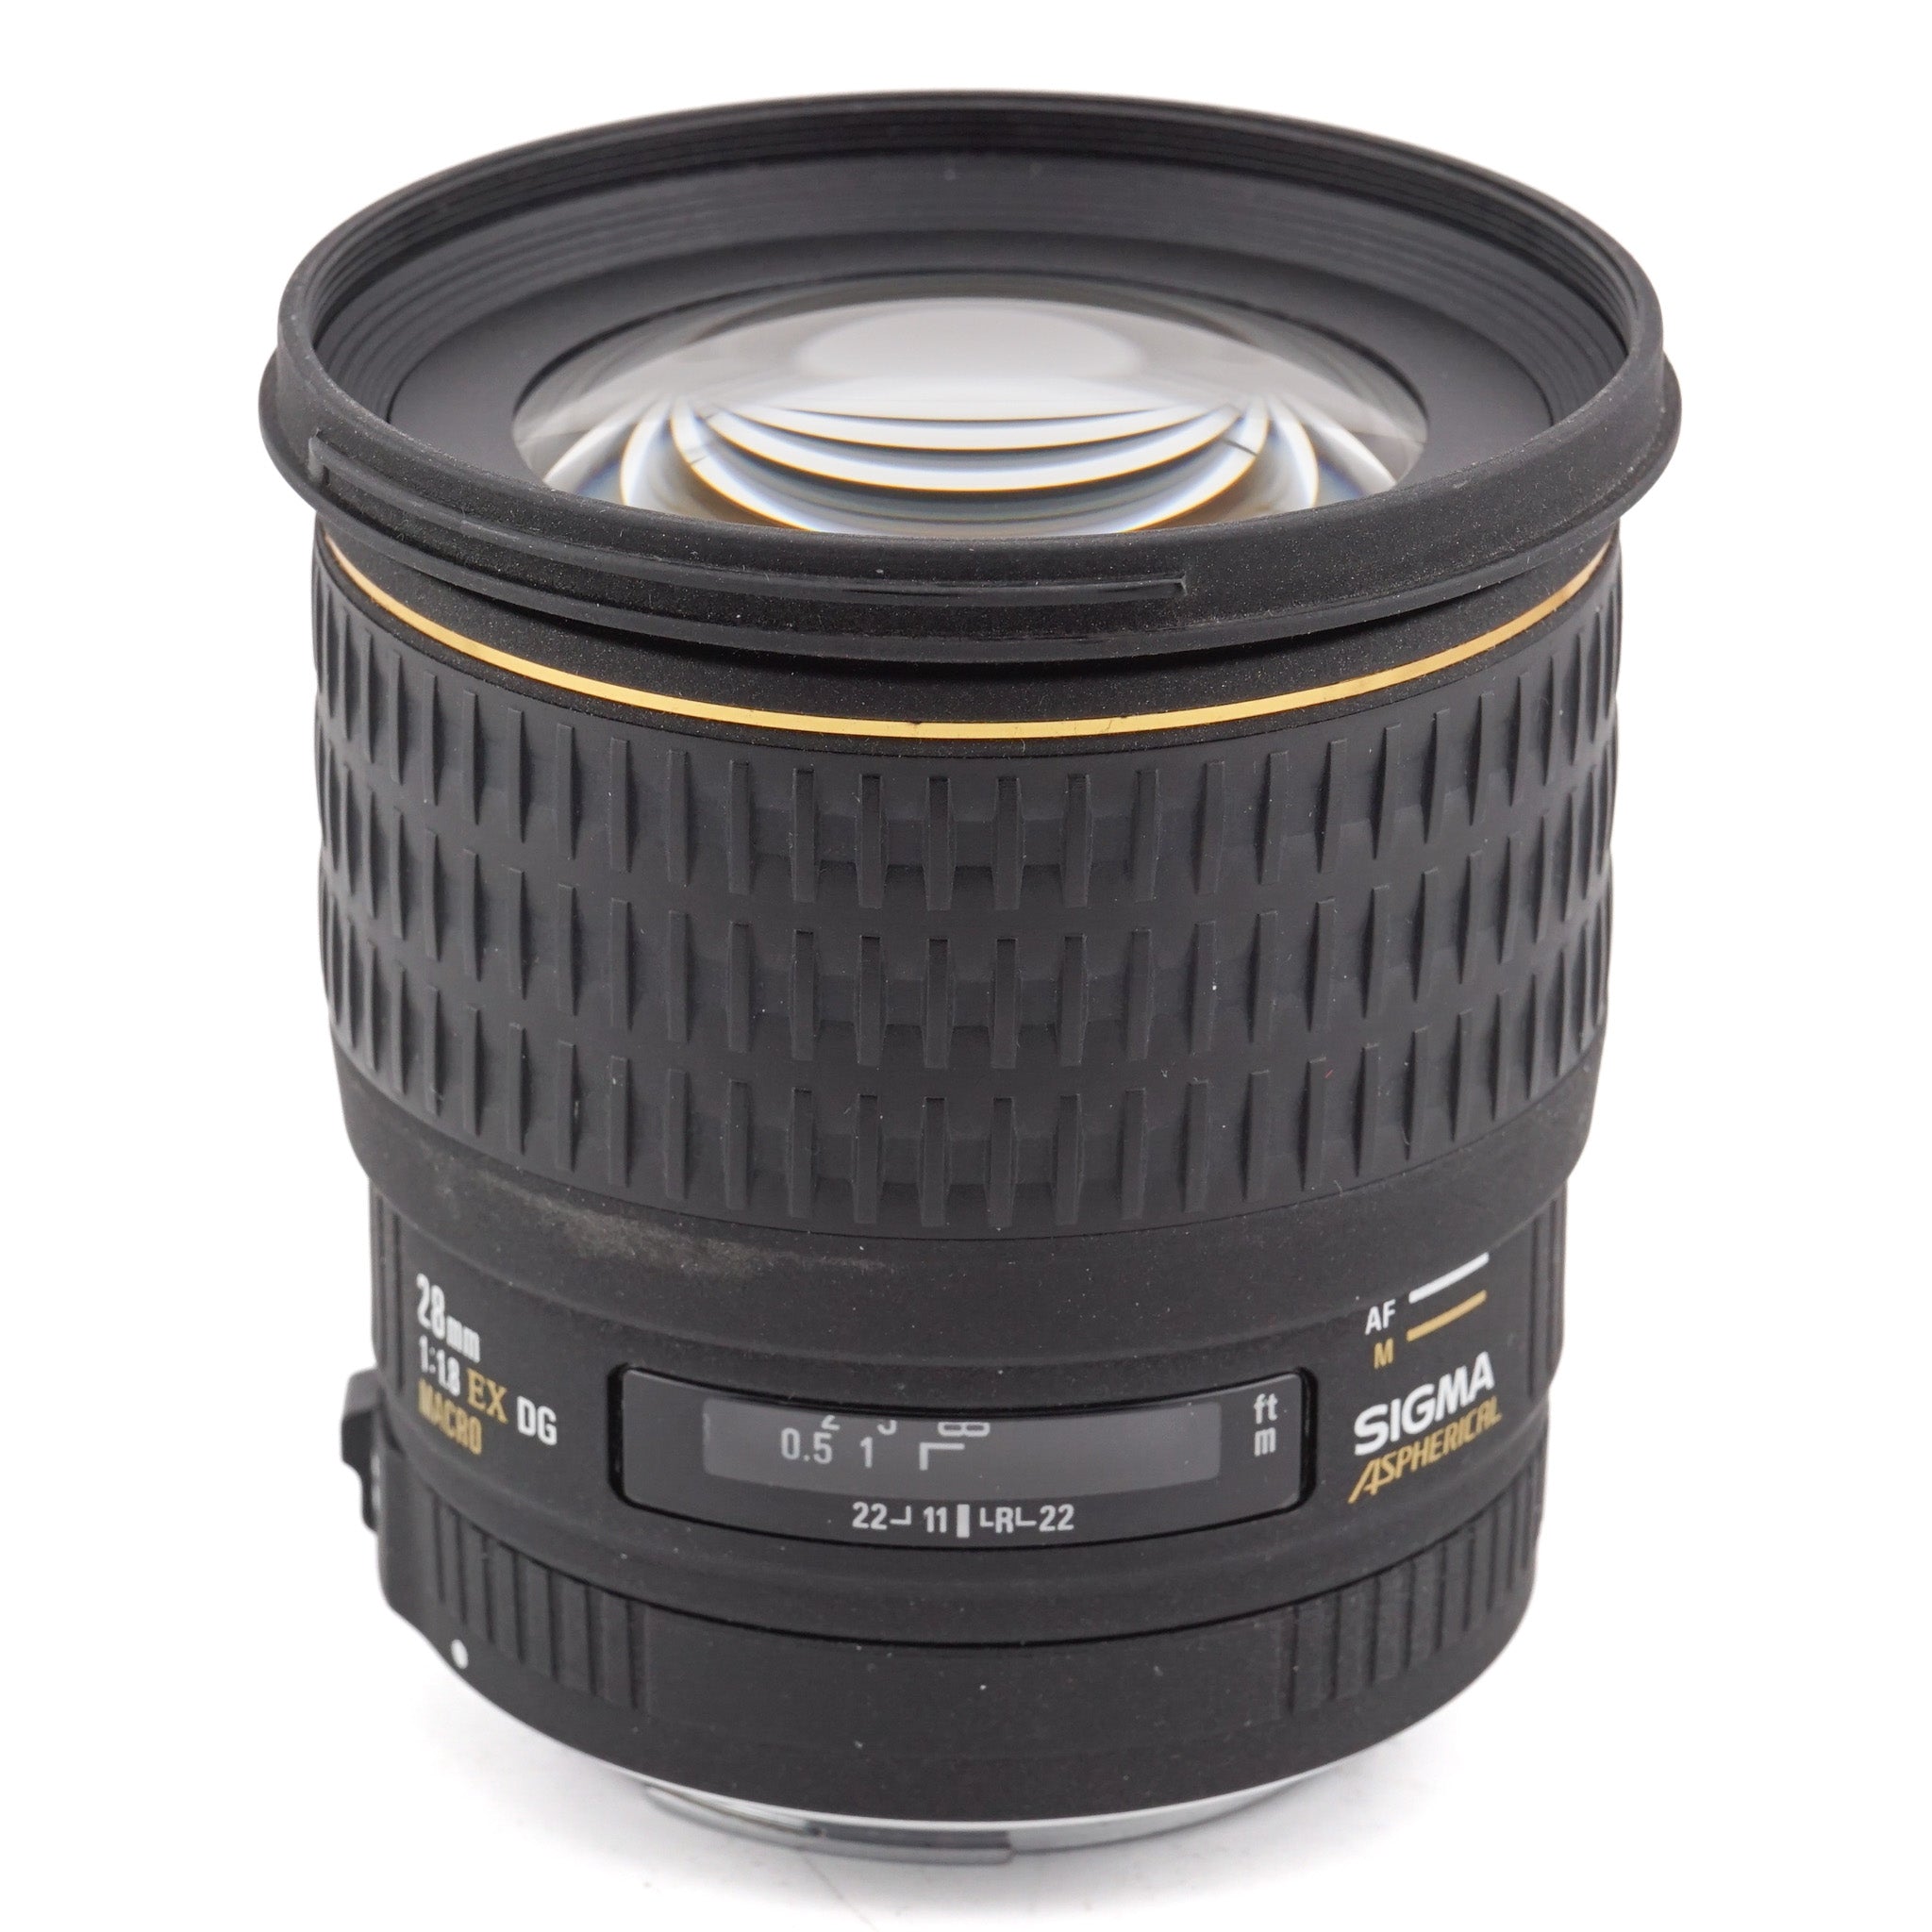 Sigma 28mm f1.8 EX DG Macro Aspherical - Lens – Kamerastore